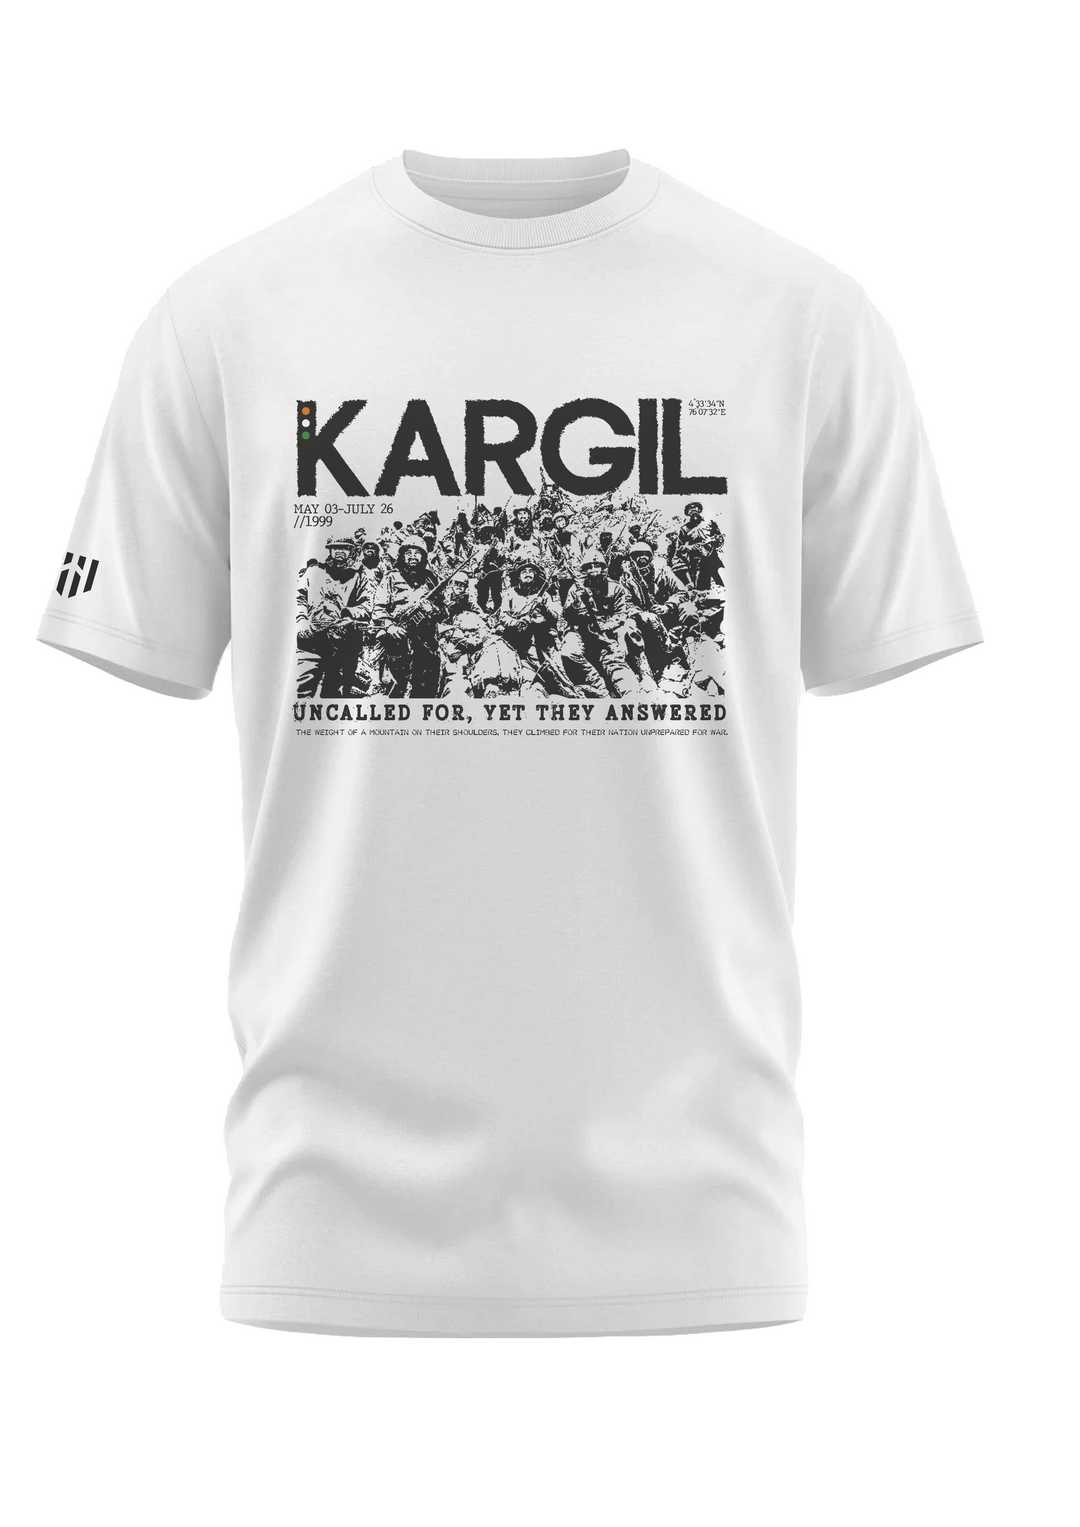 KARGIL VICTORY 1999 T-Shirt